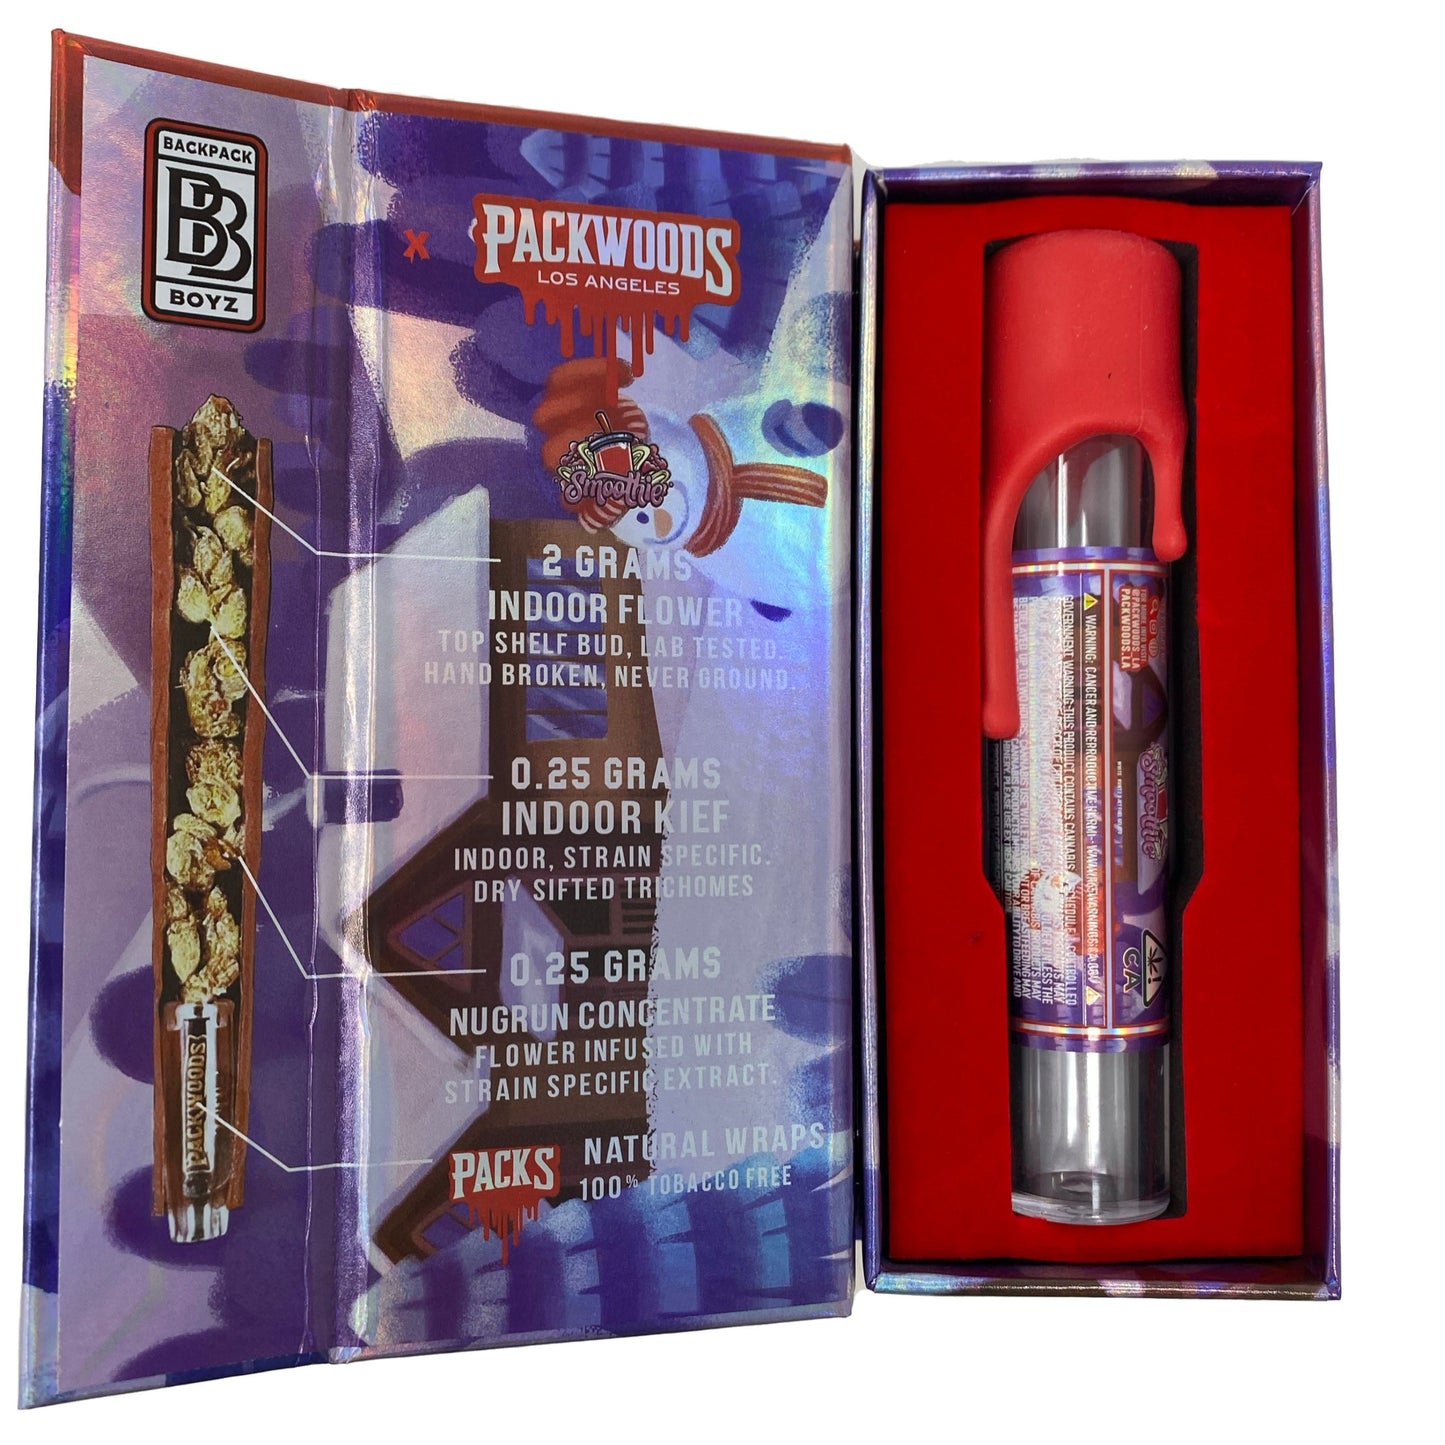 PACKWOODS X BACKPACK BOYZ BRAND NEW Pre-roll Tube Packaging